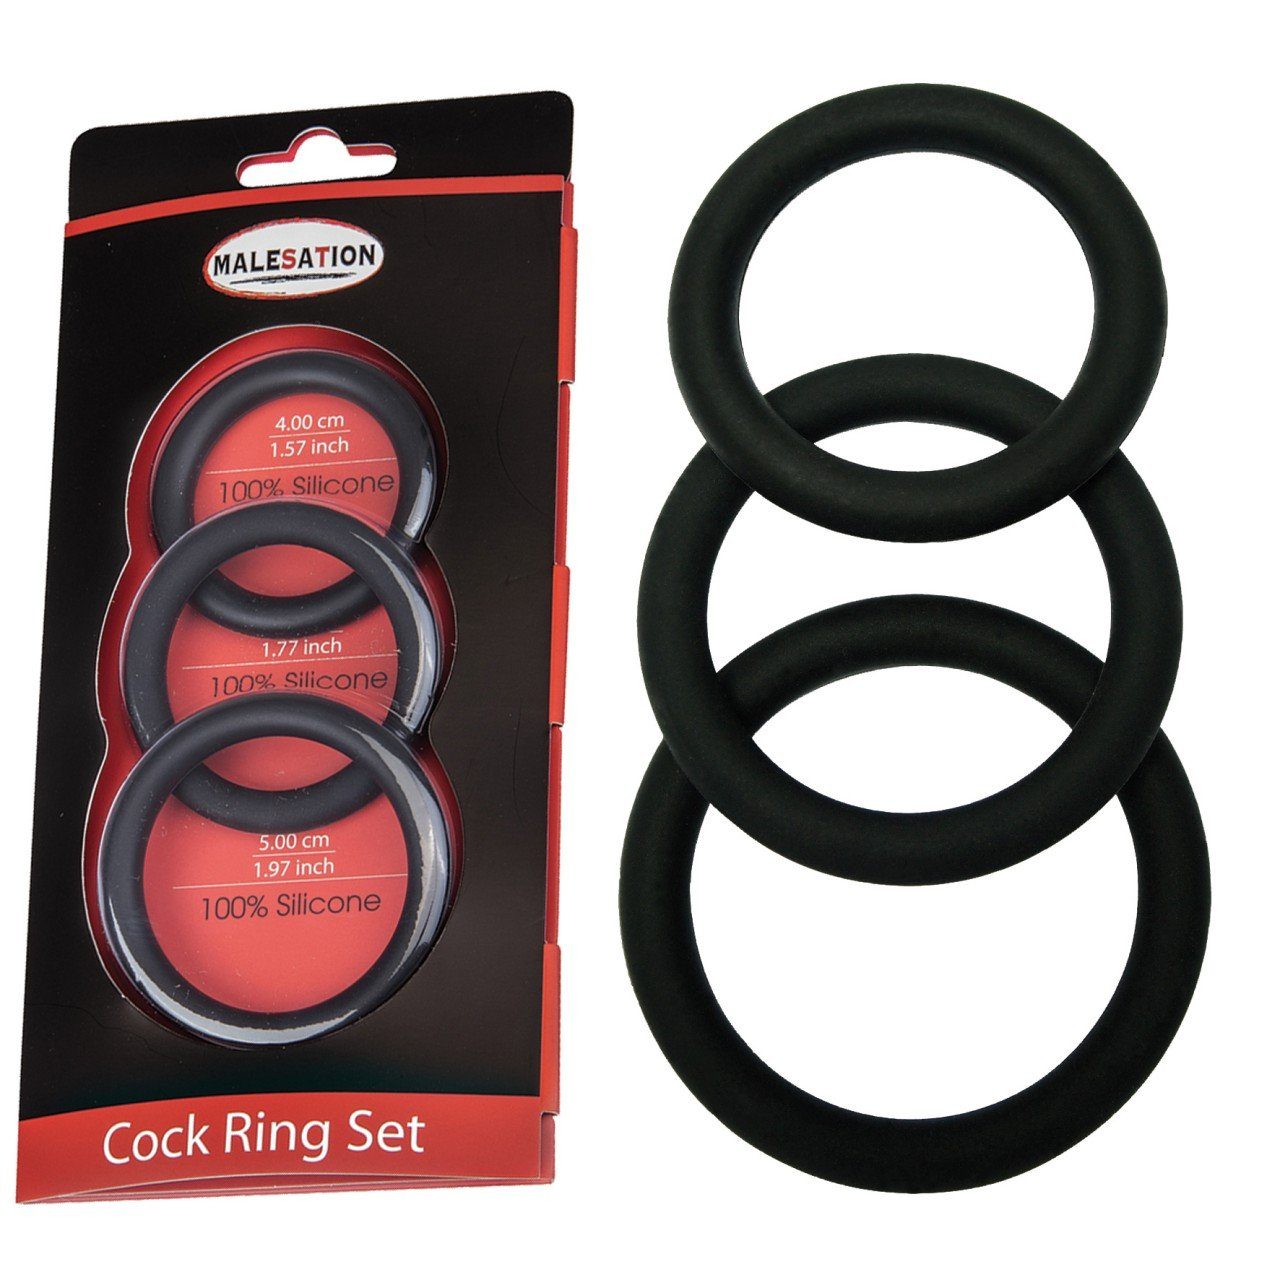 cm) Set Ring 4,50 cm, 5,00 cm, Penisring MALESATION Cock (4,00 Malesation